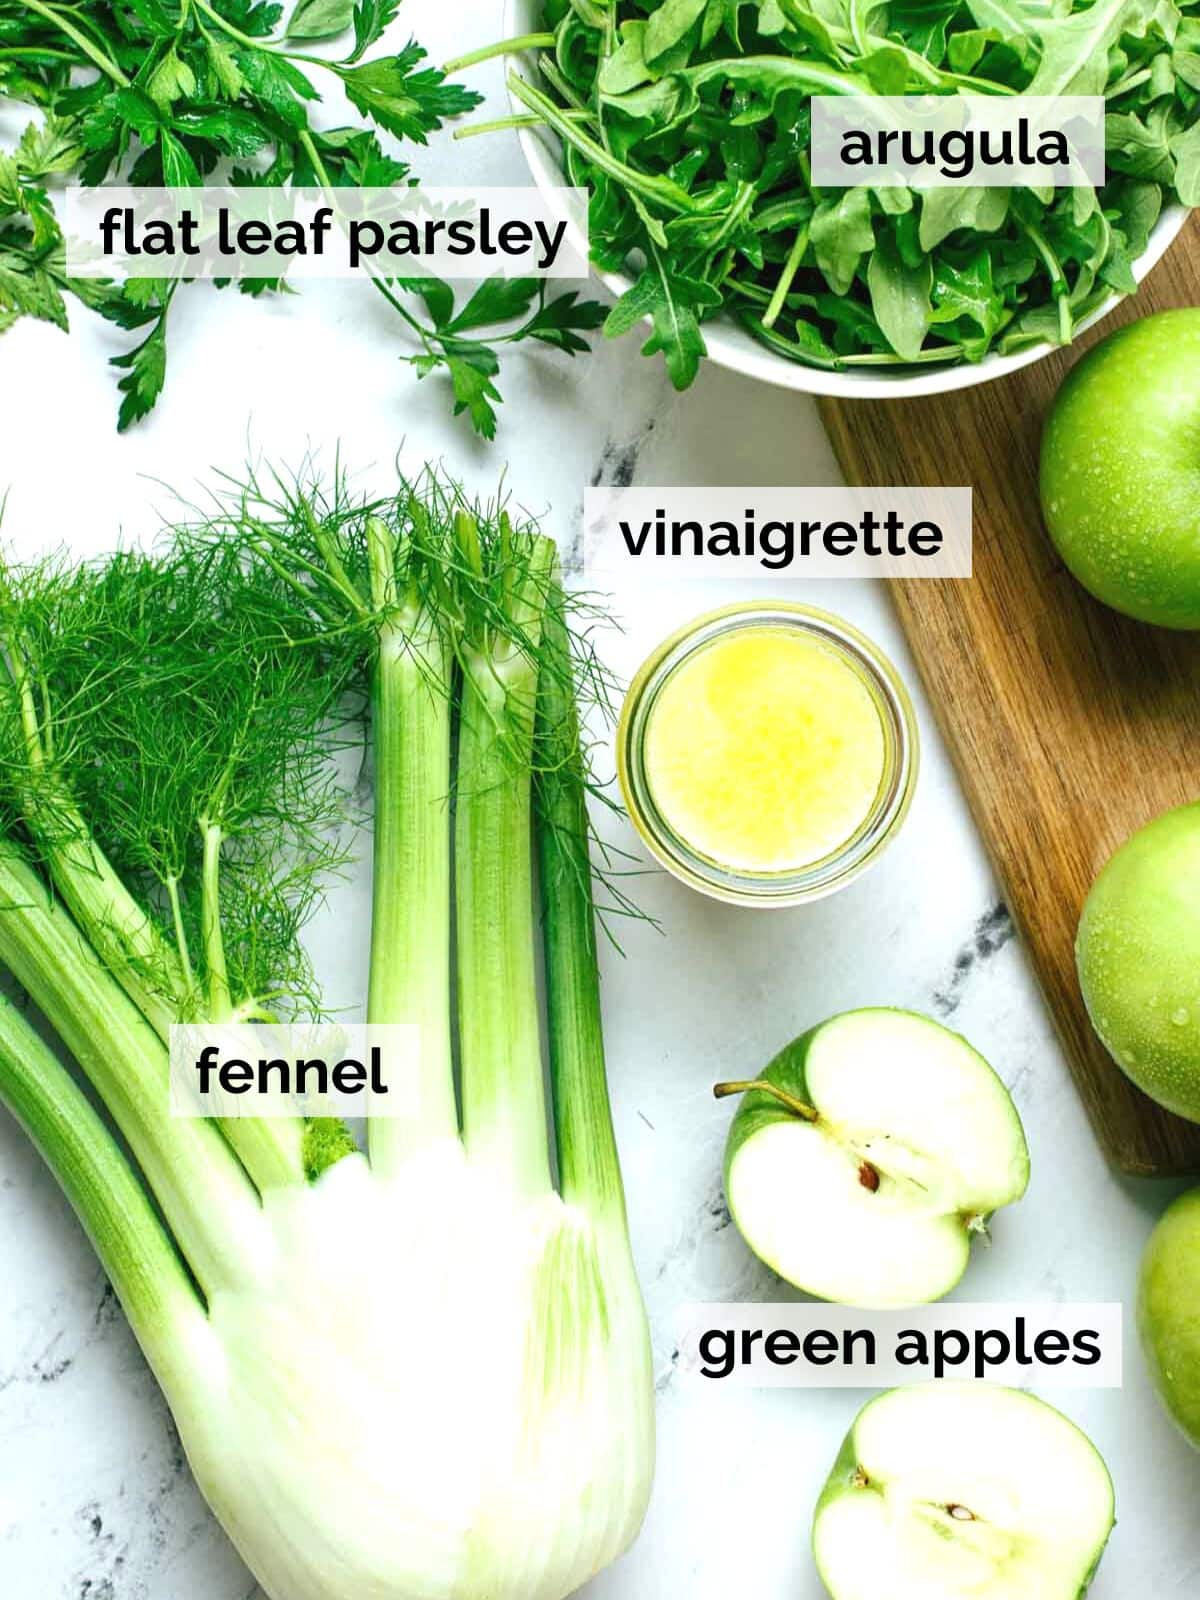 Fennel, apples, parsley, arugula, and vinaigrette on a table.